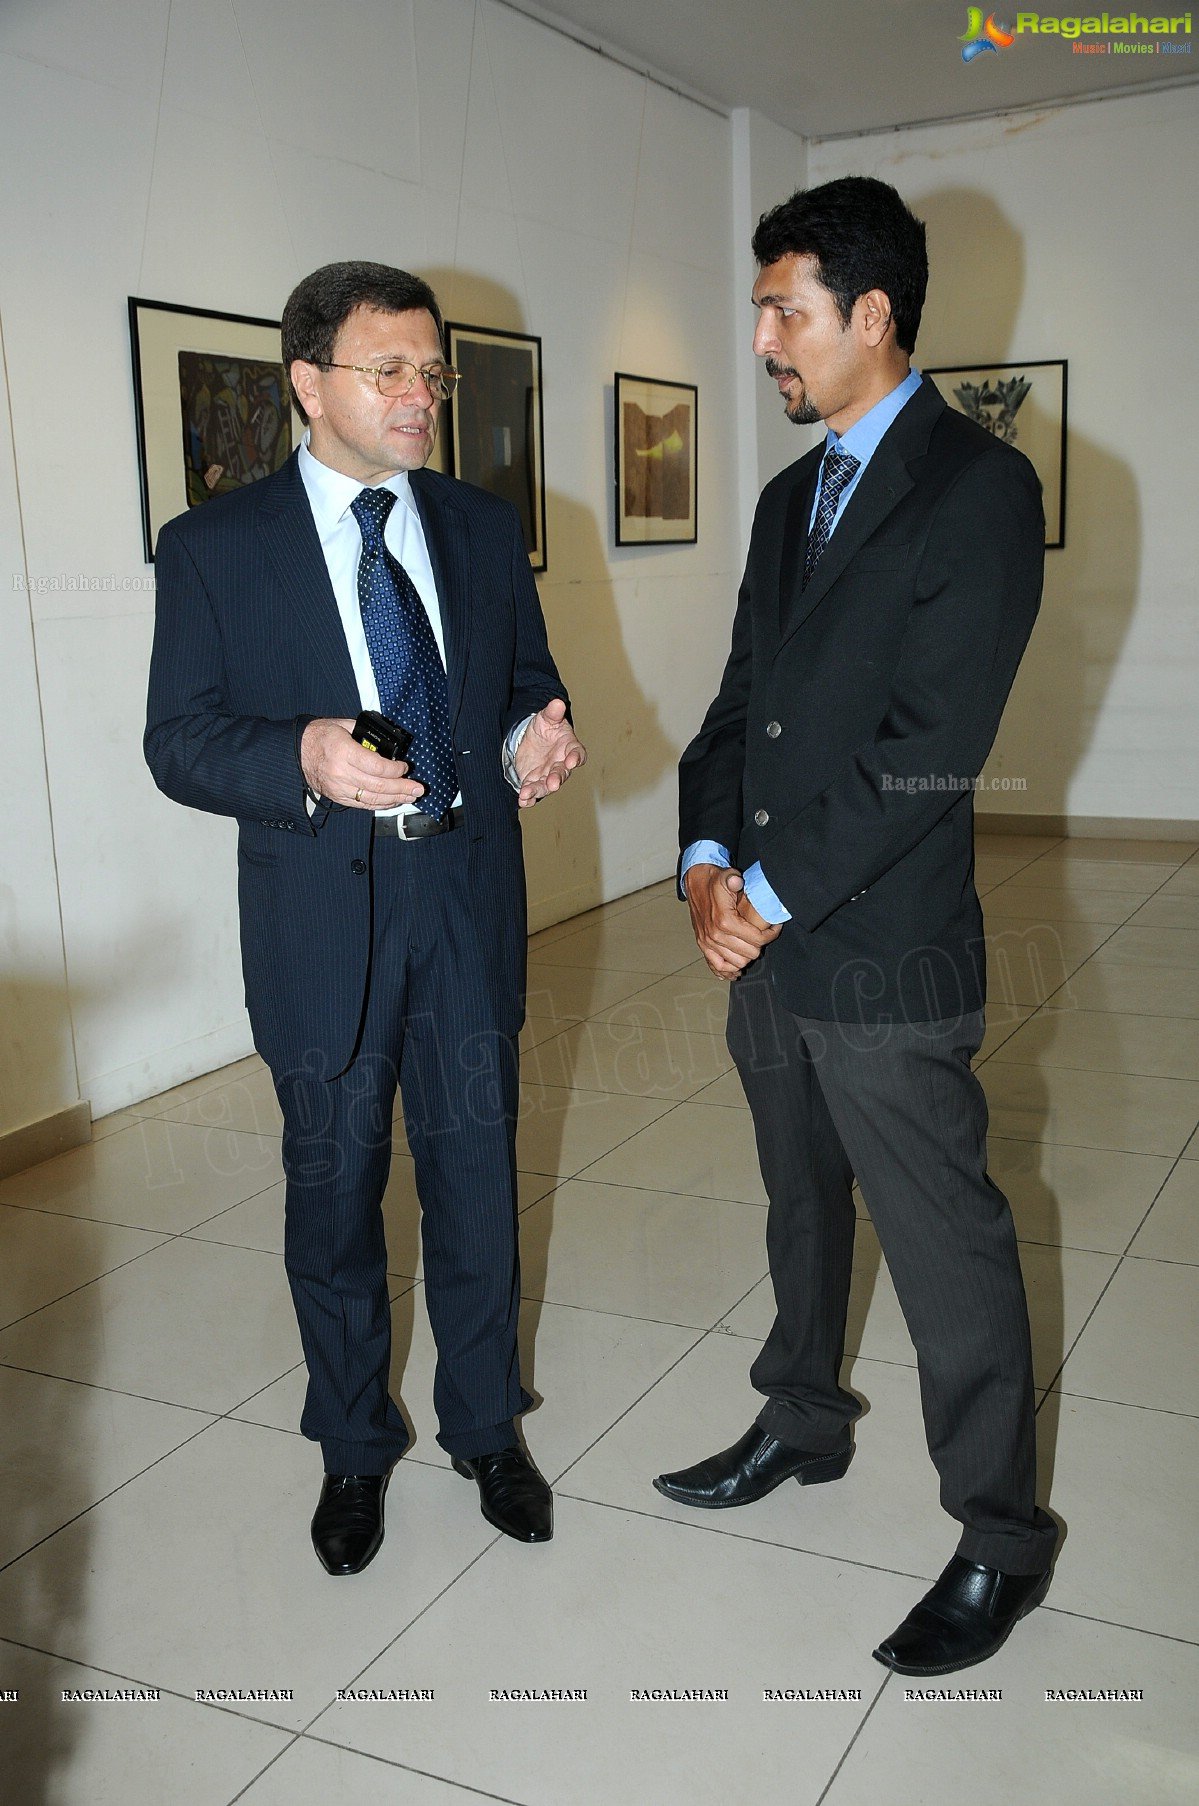 Bulgarian Consulate launches Art Exhibition